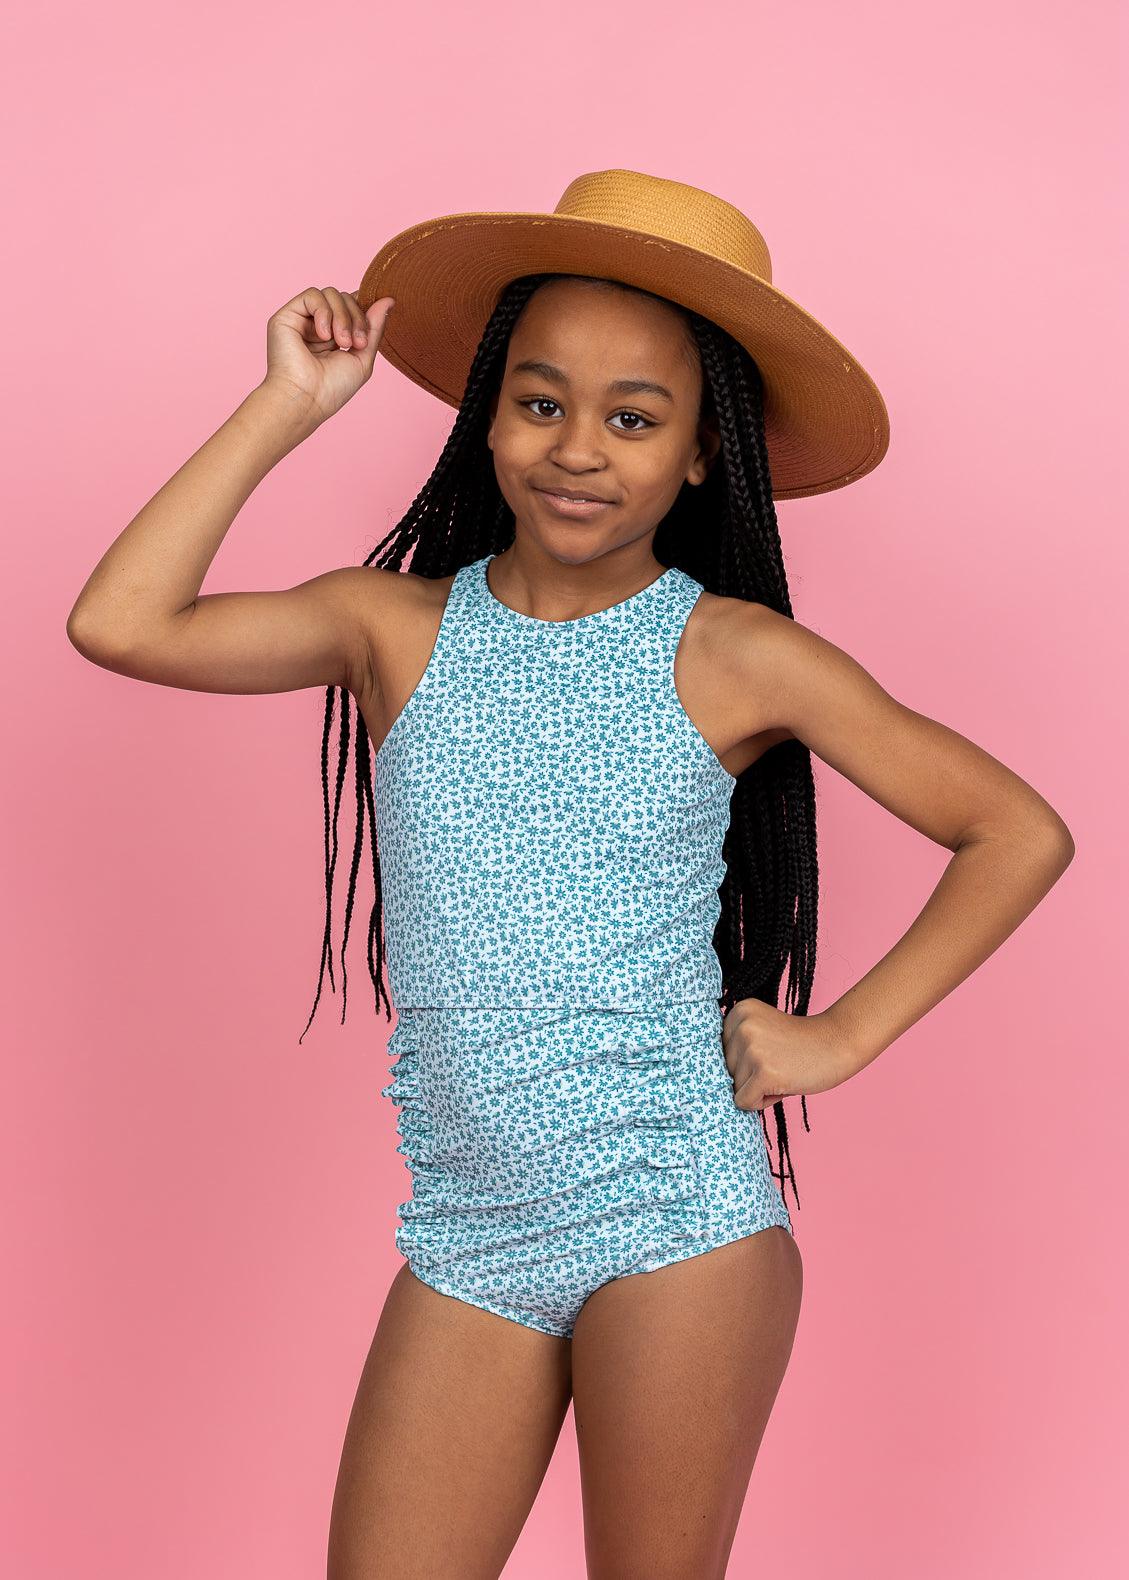 ZMHEGW Cute Swimsuits For Teens Holiday Cute Tie Dye Print Bikini